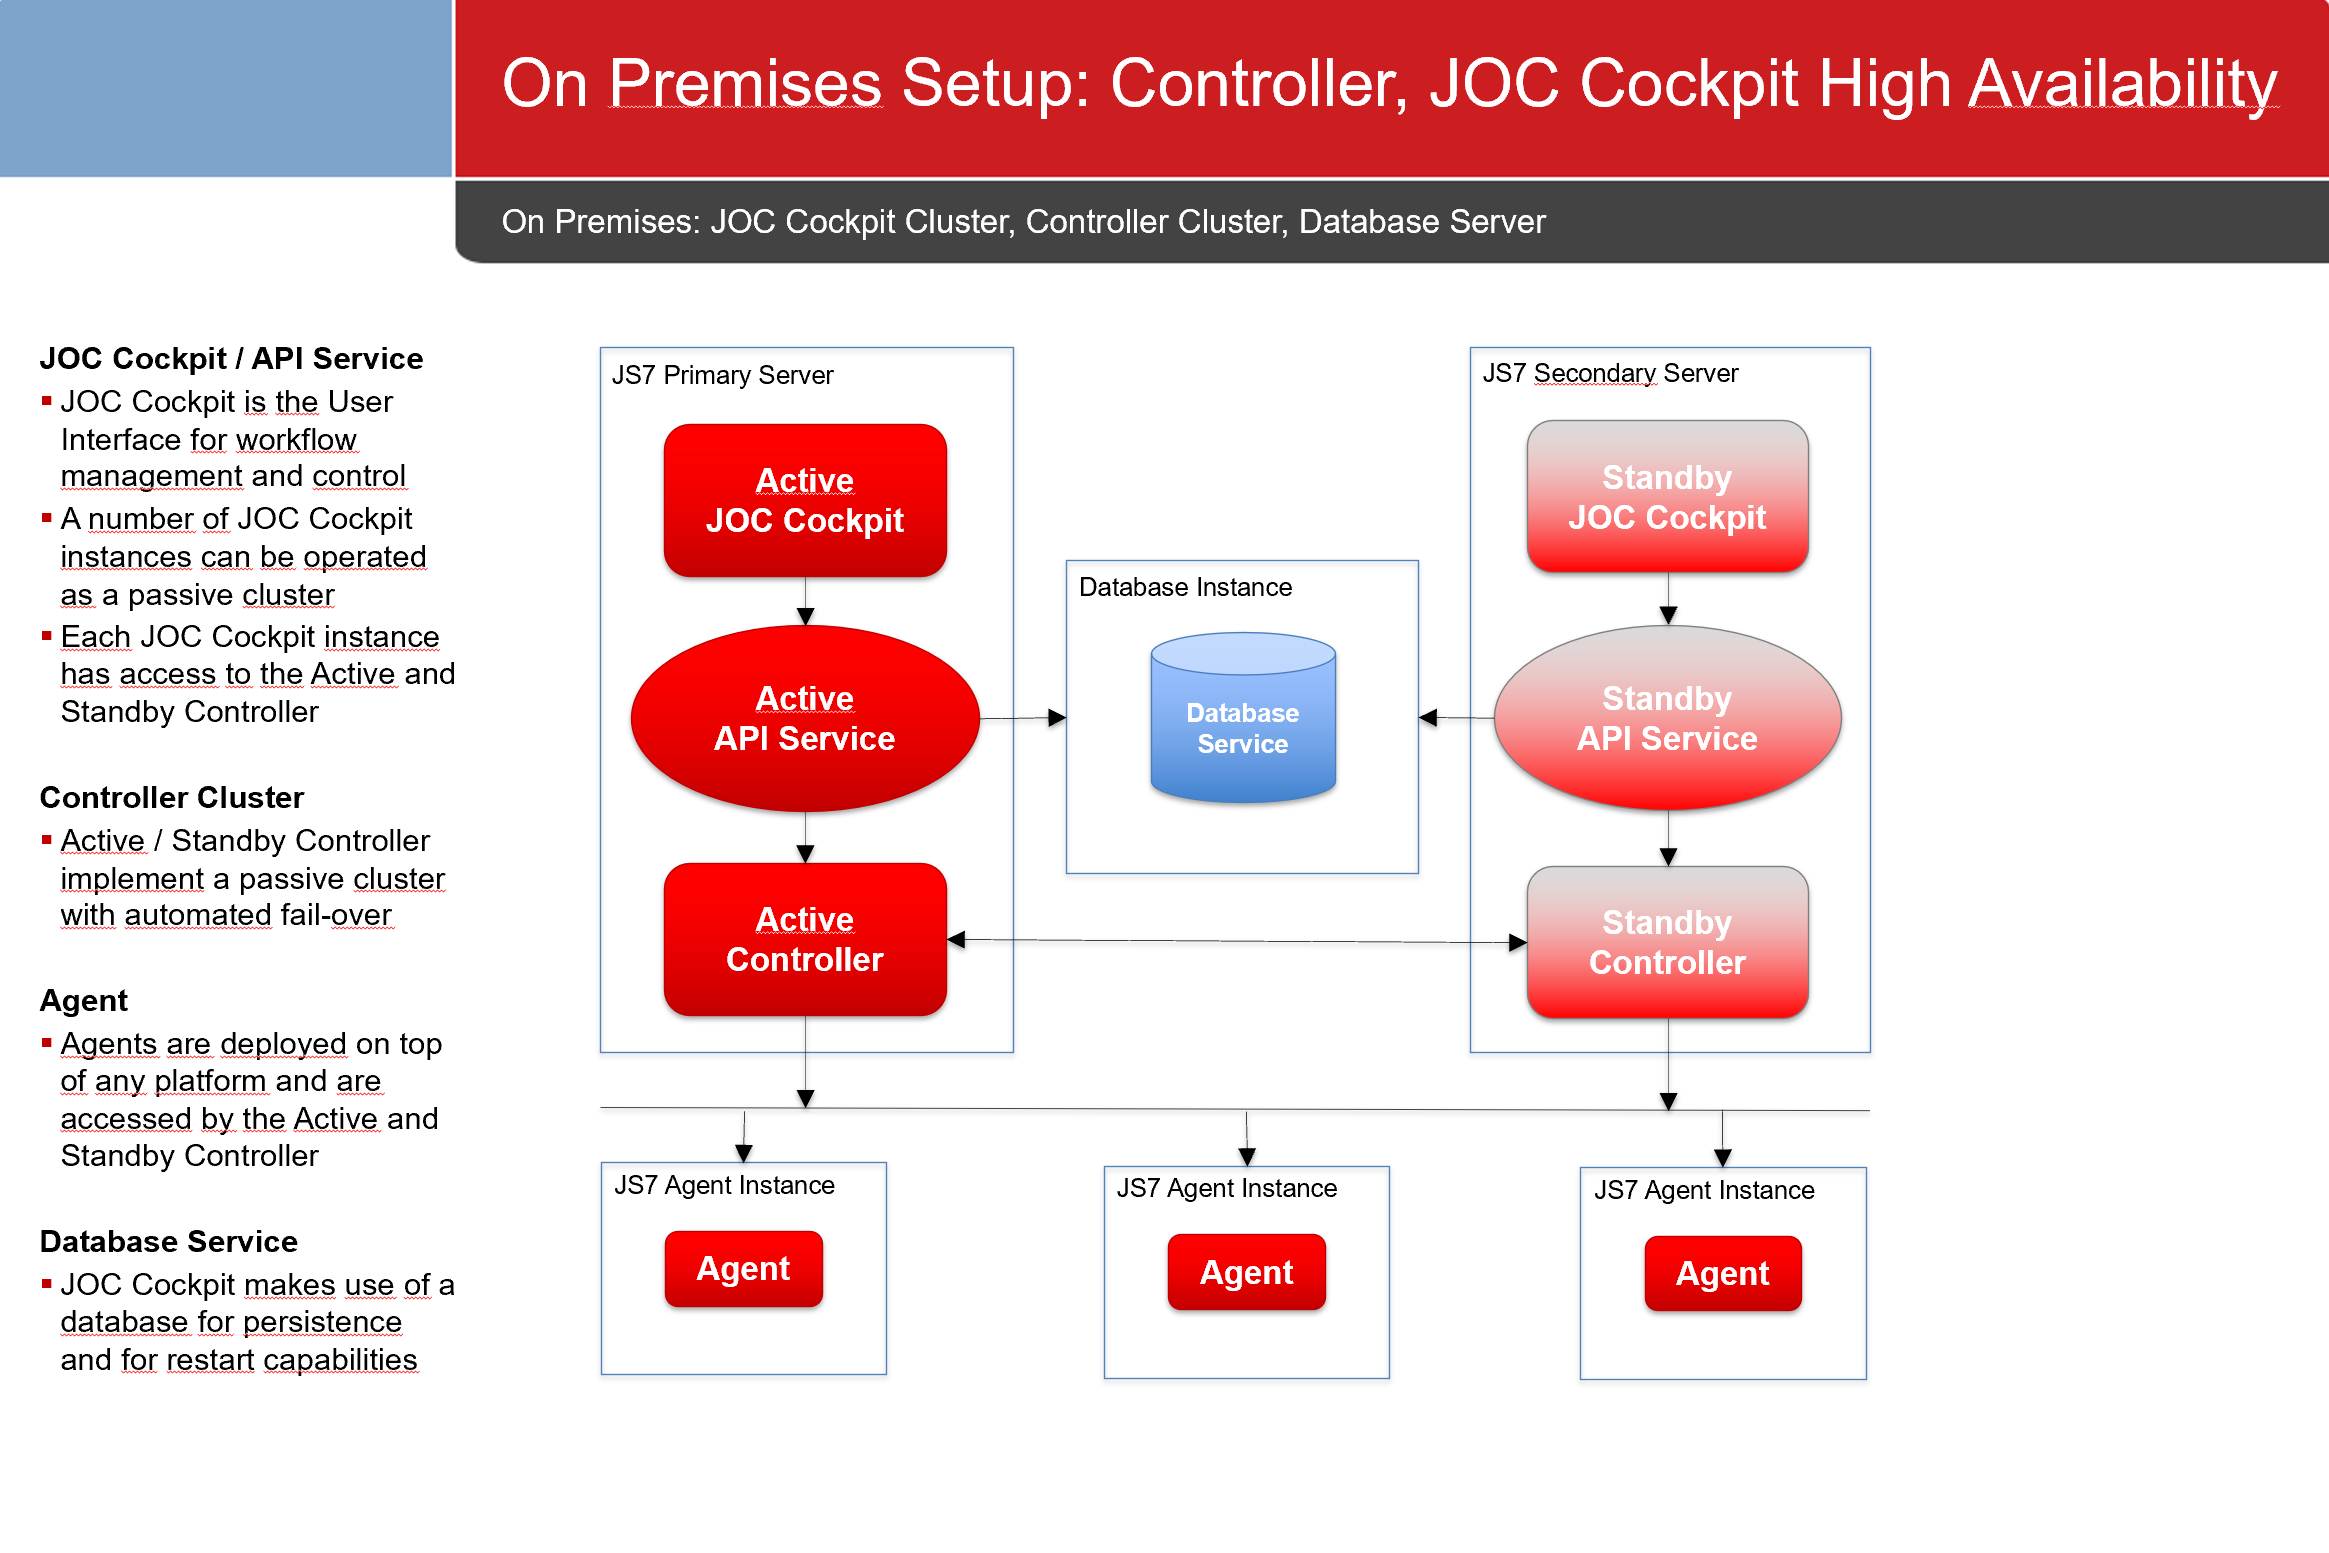 On-premises Setup: JOC Cockpit and Controller High Availability